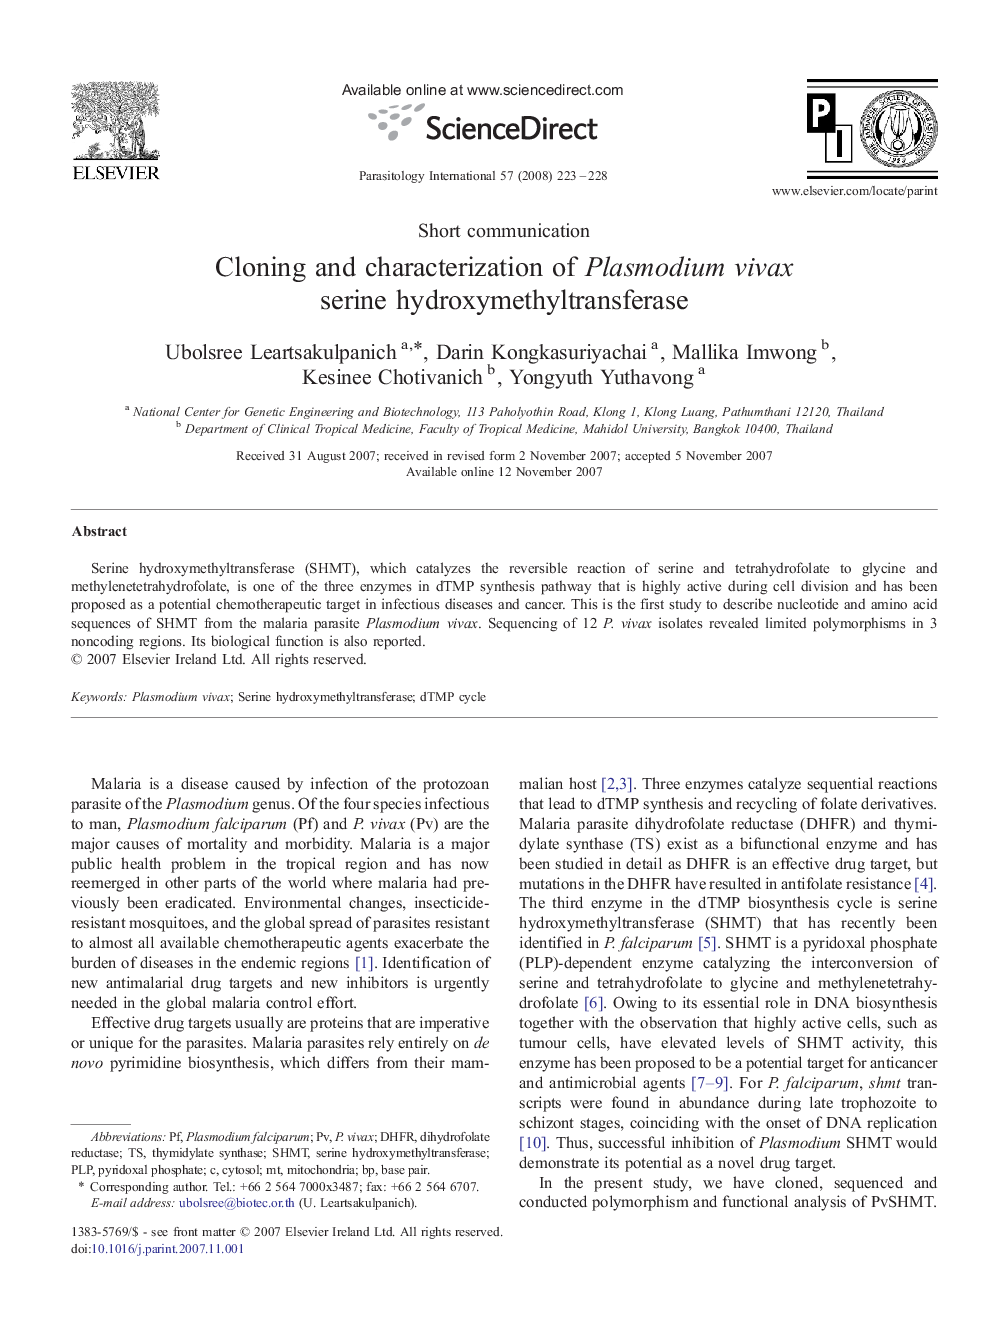 Cloning and characterization of Plasmodium vivax serine hydroxymethyltransferase